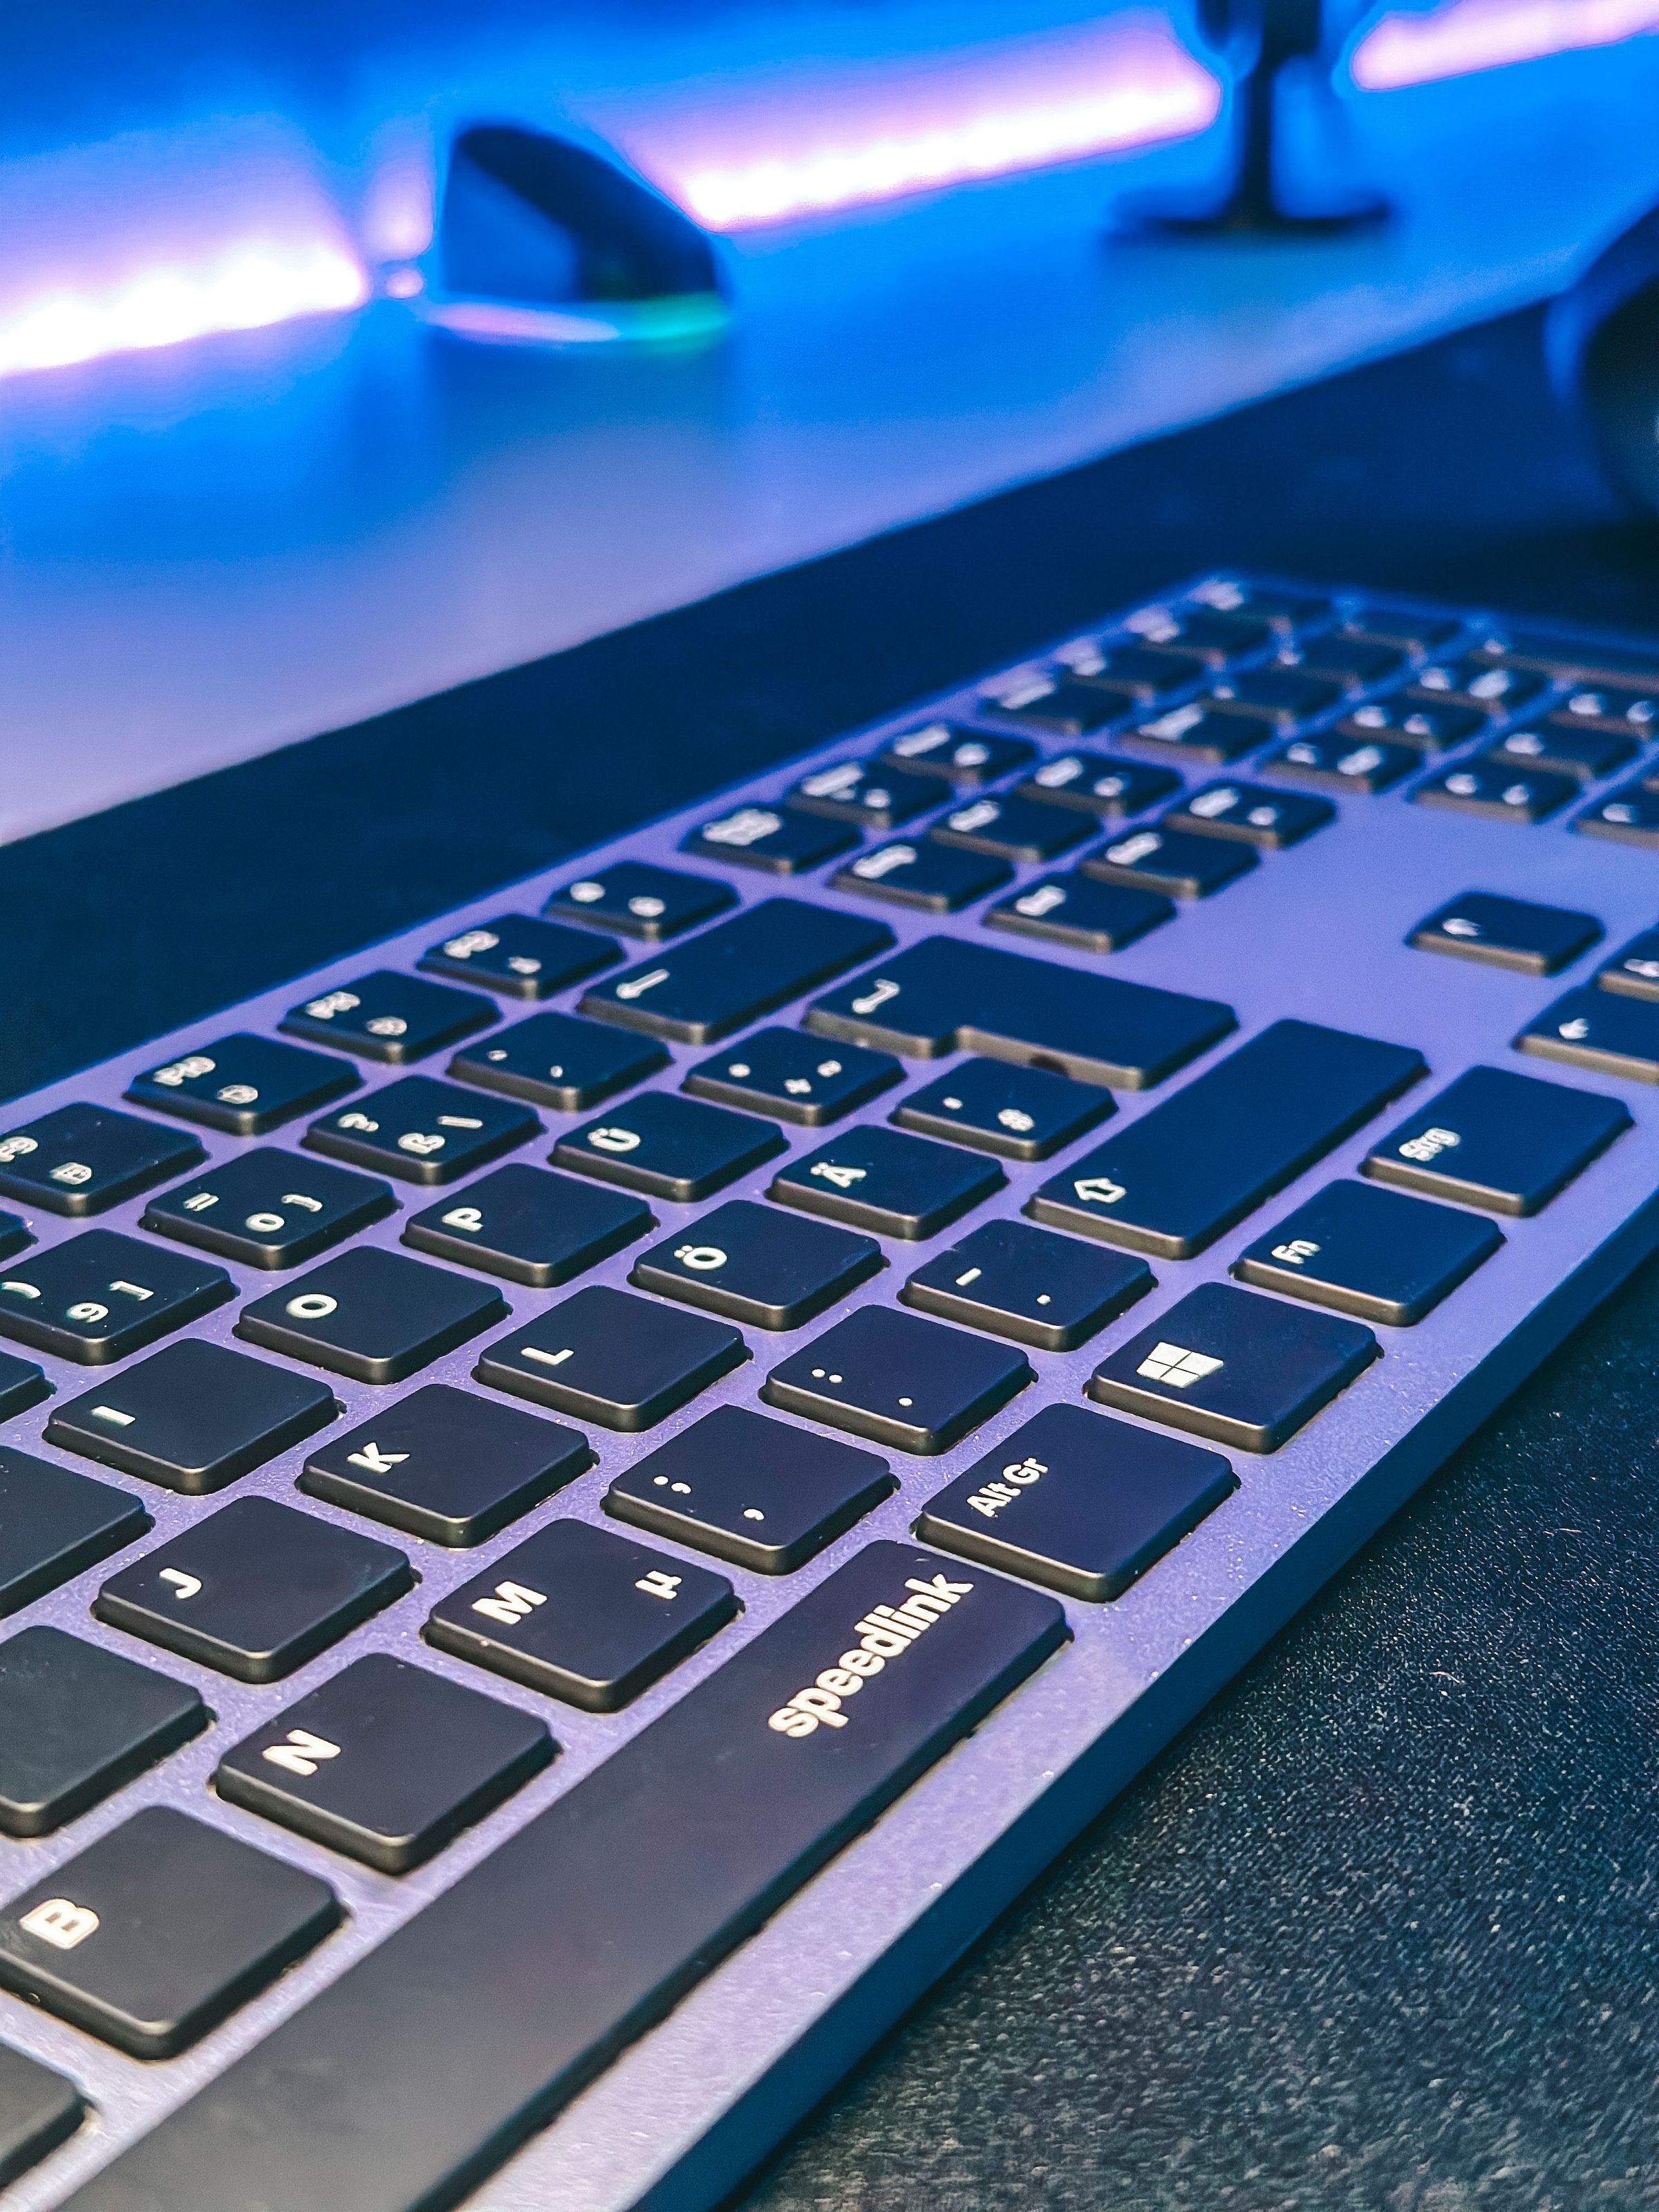 Speedlink Wireless-Tastatur »LEVIA Illuminated Metal Office Scissor Keyboard«, Bluetooth